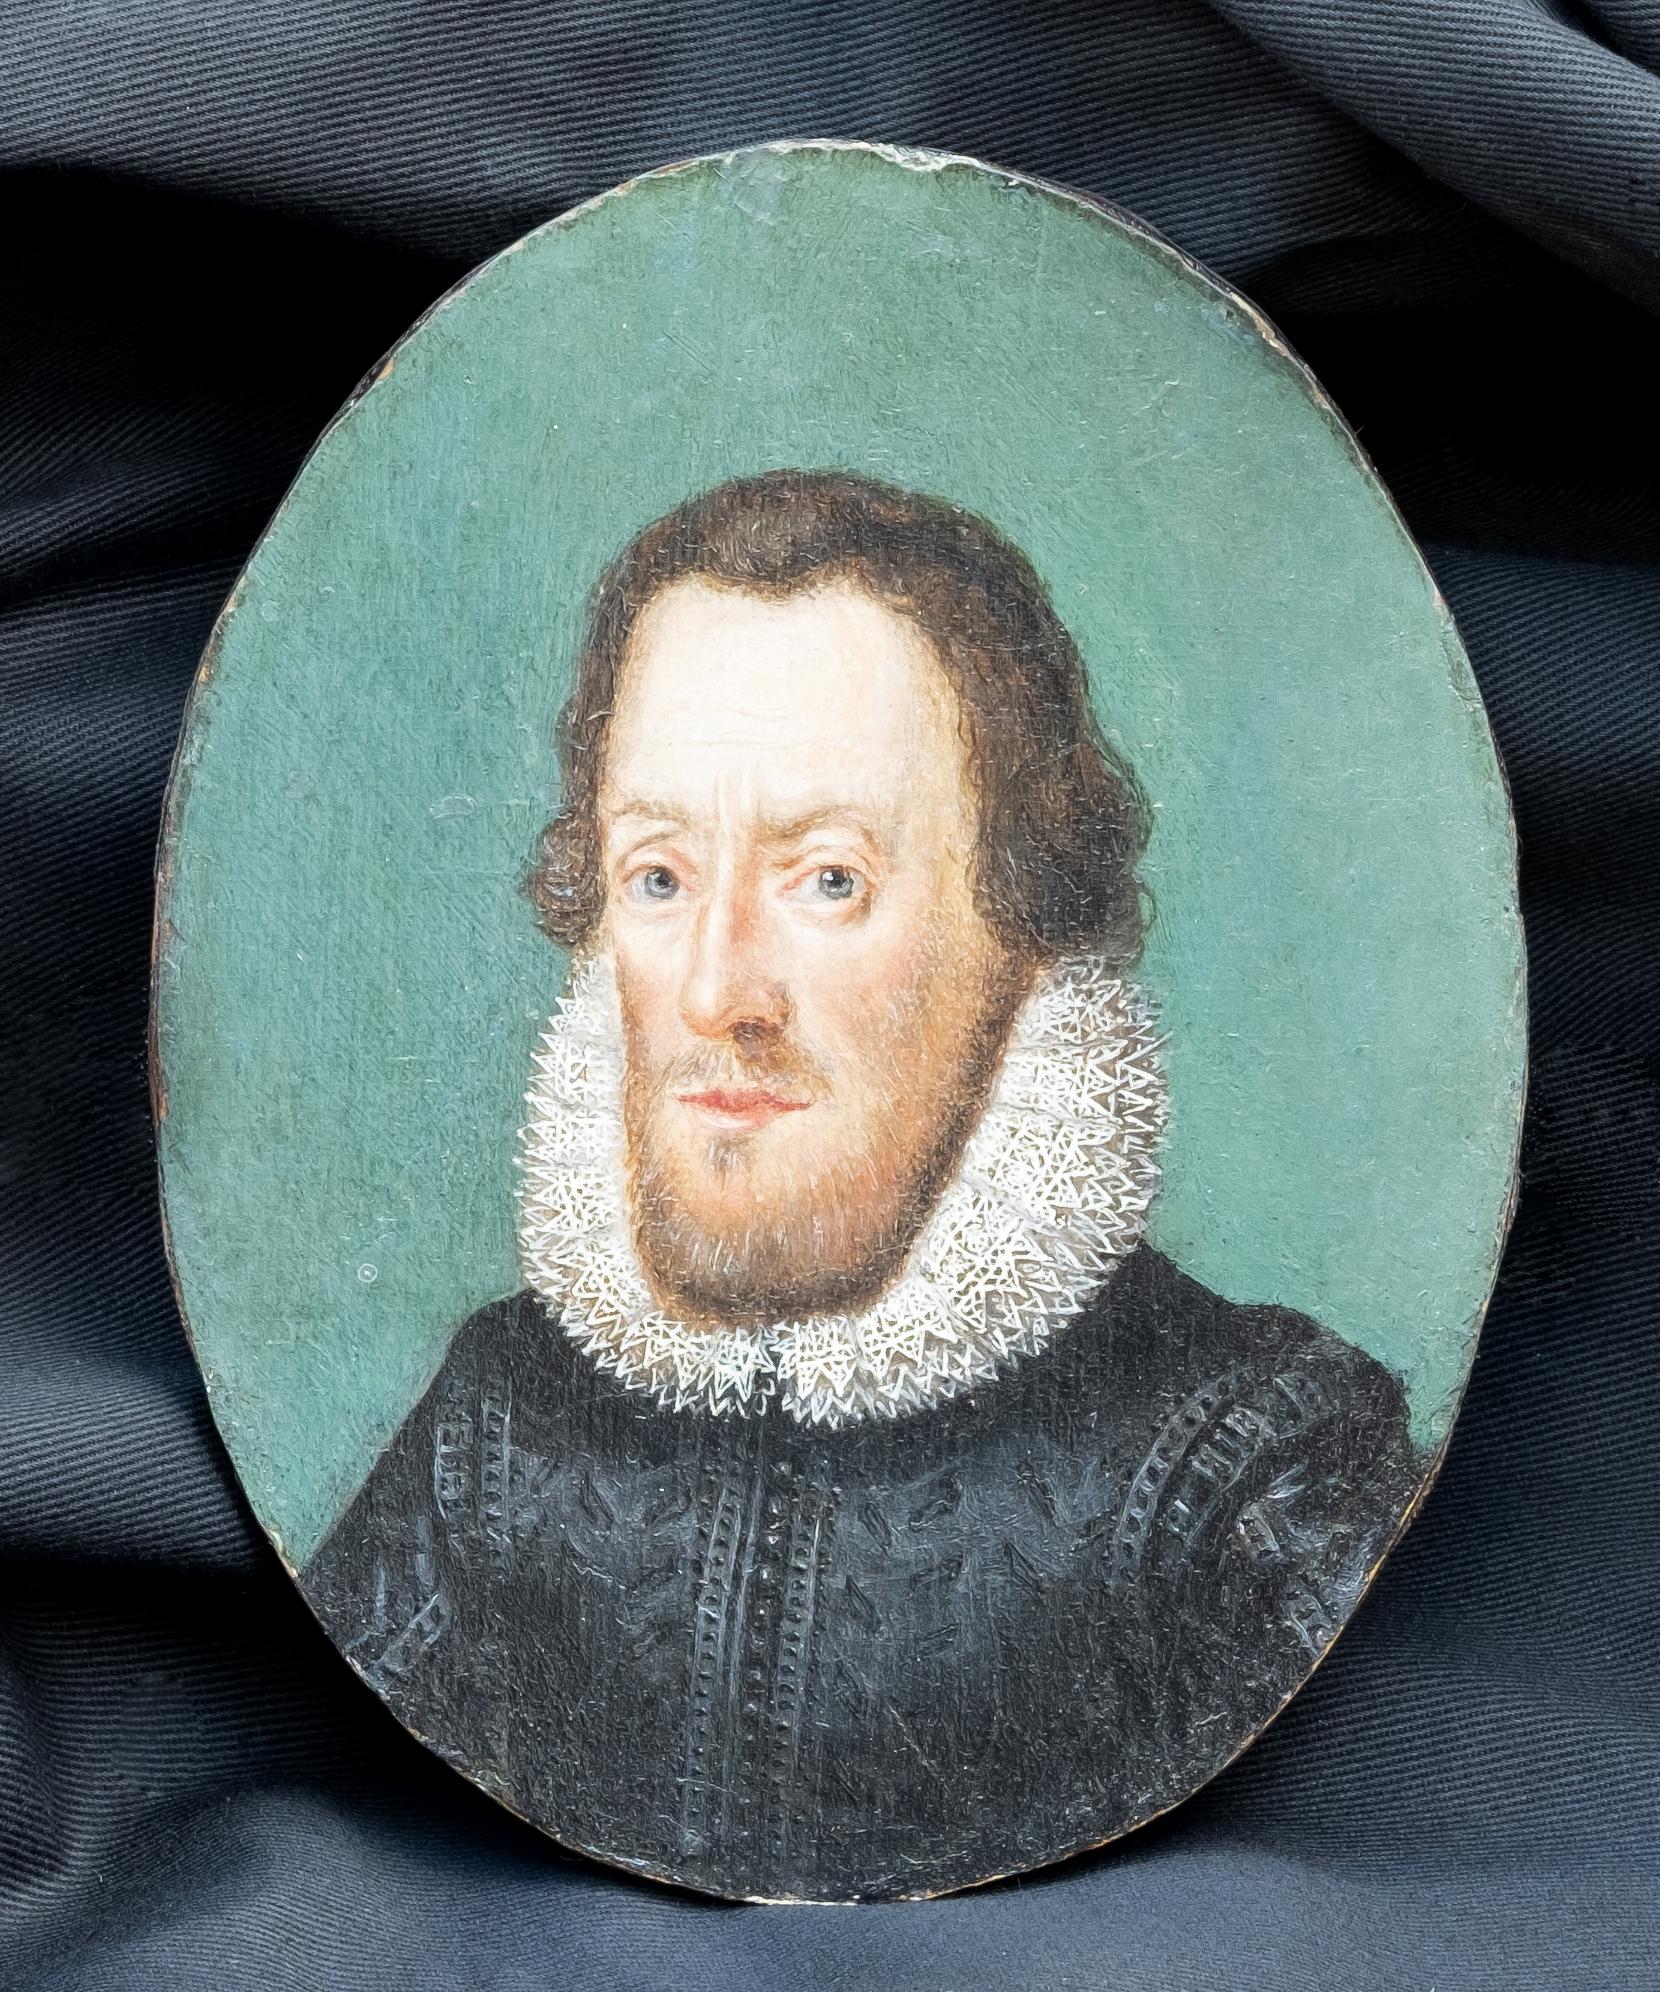 Unknown Portrait Painting - c.1700 Miniature Portrait of Sir Walter Raleigh (Nicholas Hilliard tradition)